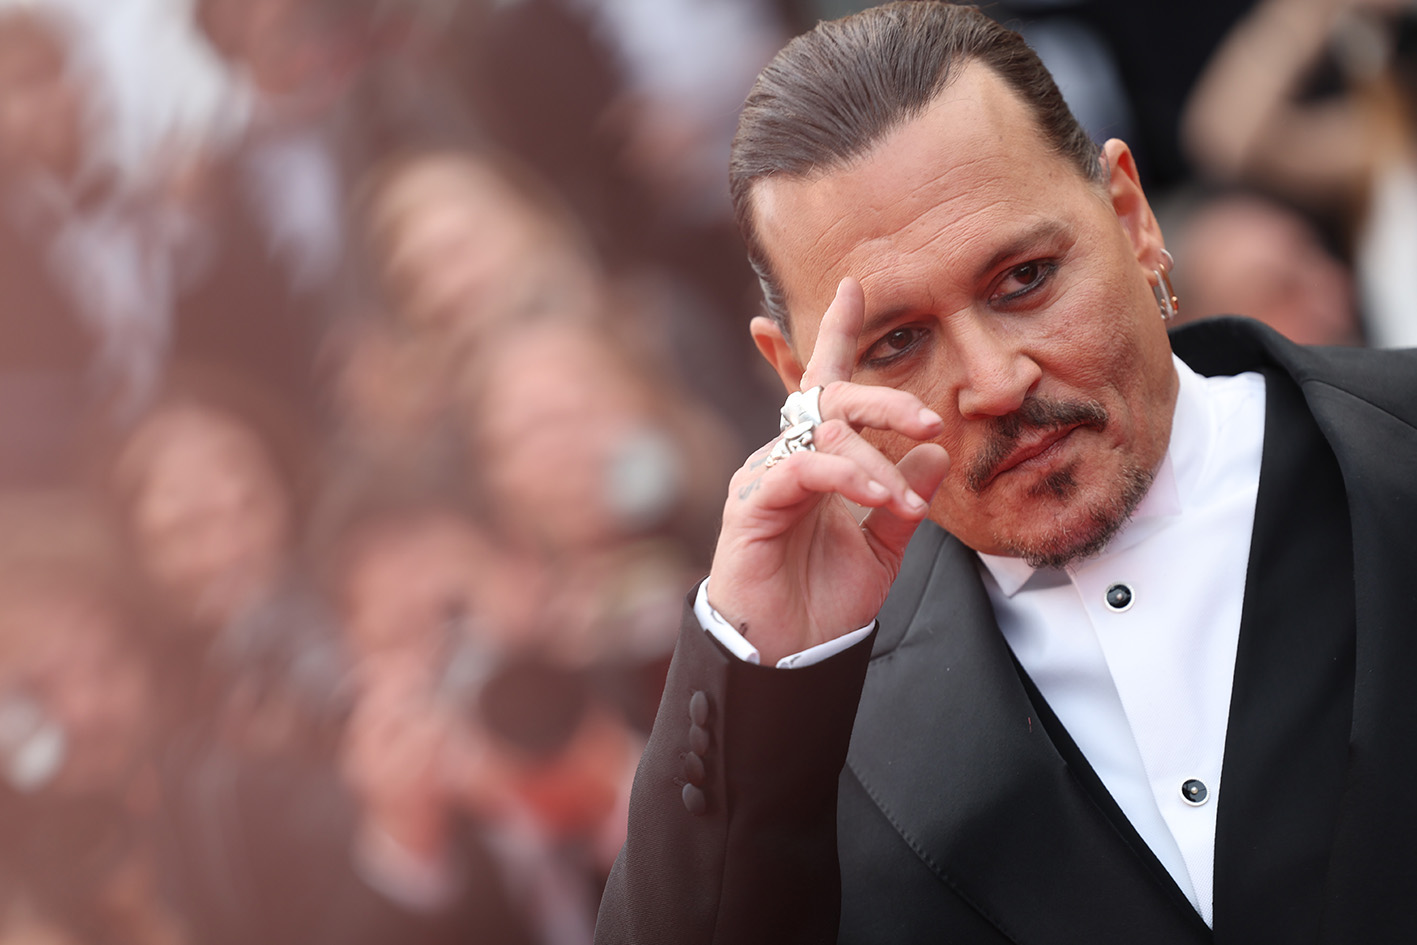 O Johnny Depp παρευρέθηκε στην πρώτη προβολή της ταινίας "Jeanne du Barry" στην Τελετή Έναρξης του 76ου Ετήσιου Φεστιβάλ των Κανών στο Palais des Festivals στις16.5.2023.